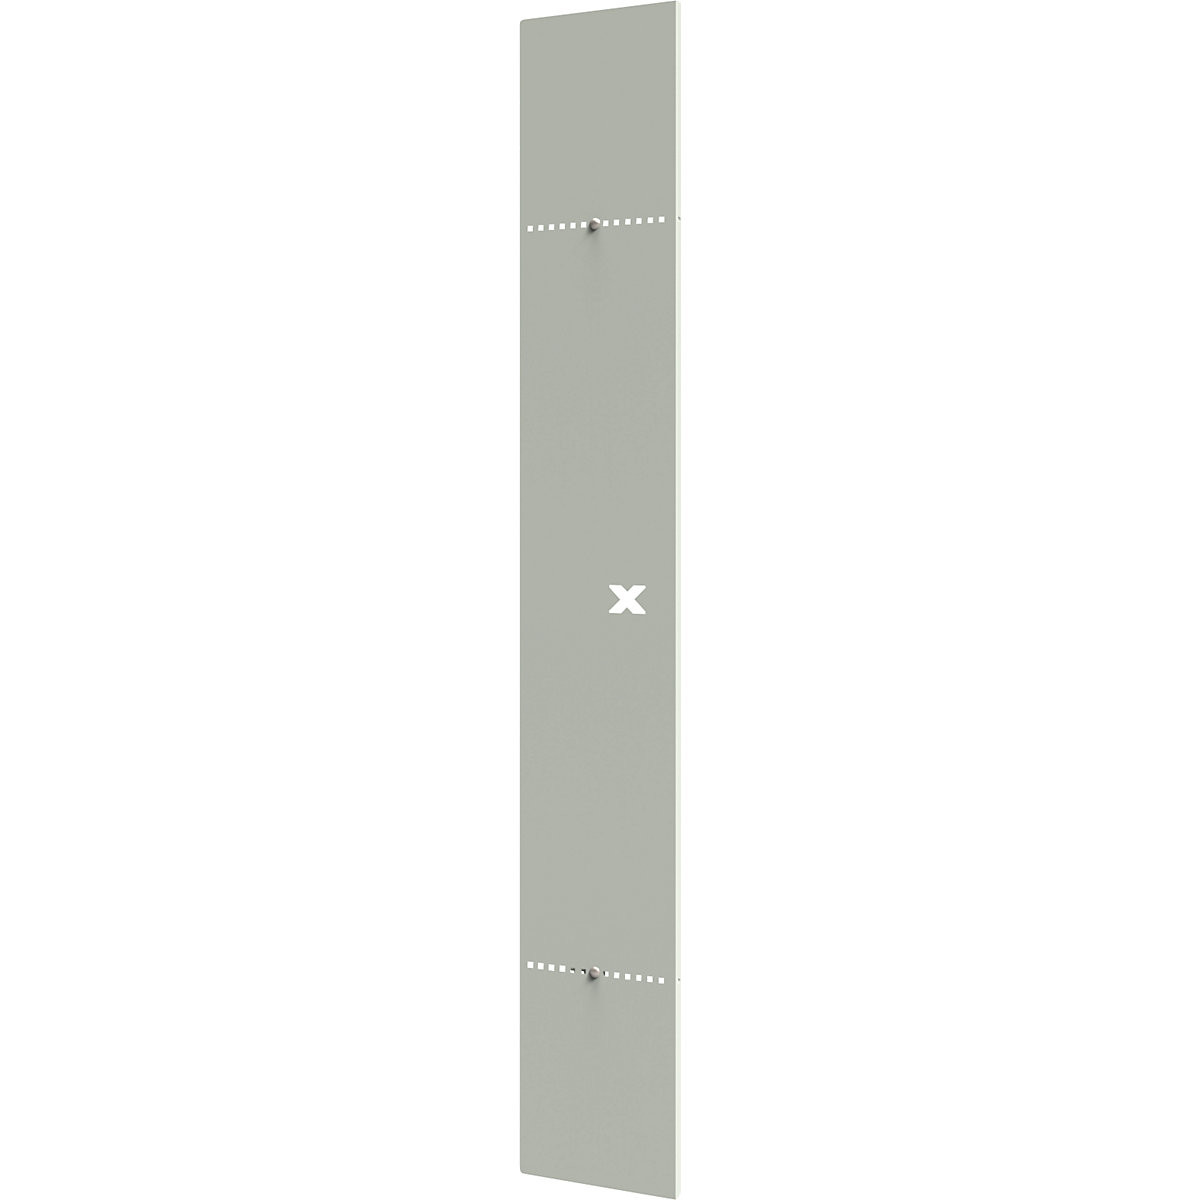 Balancing sheet, adjustable – Axelent